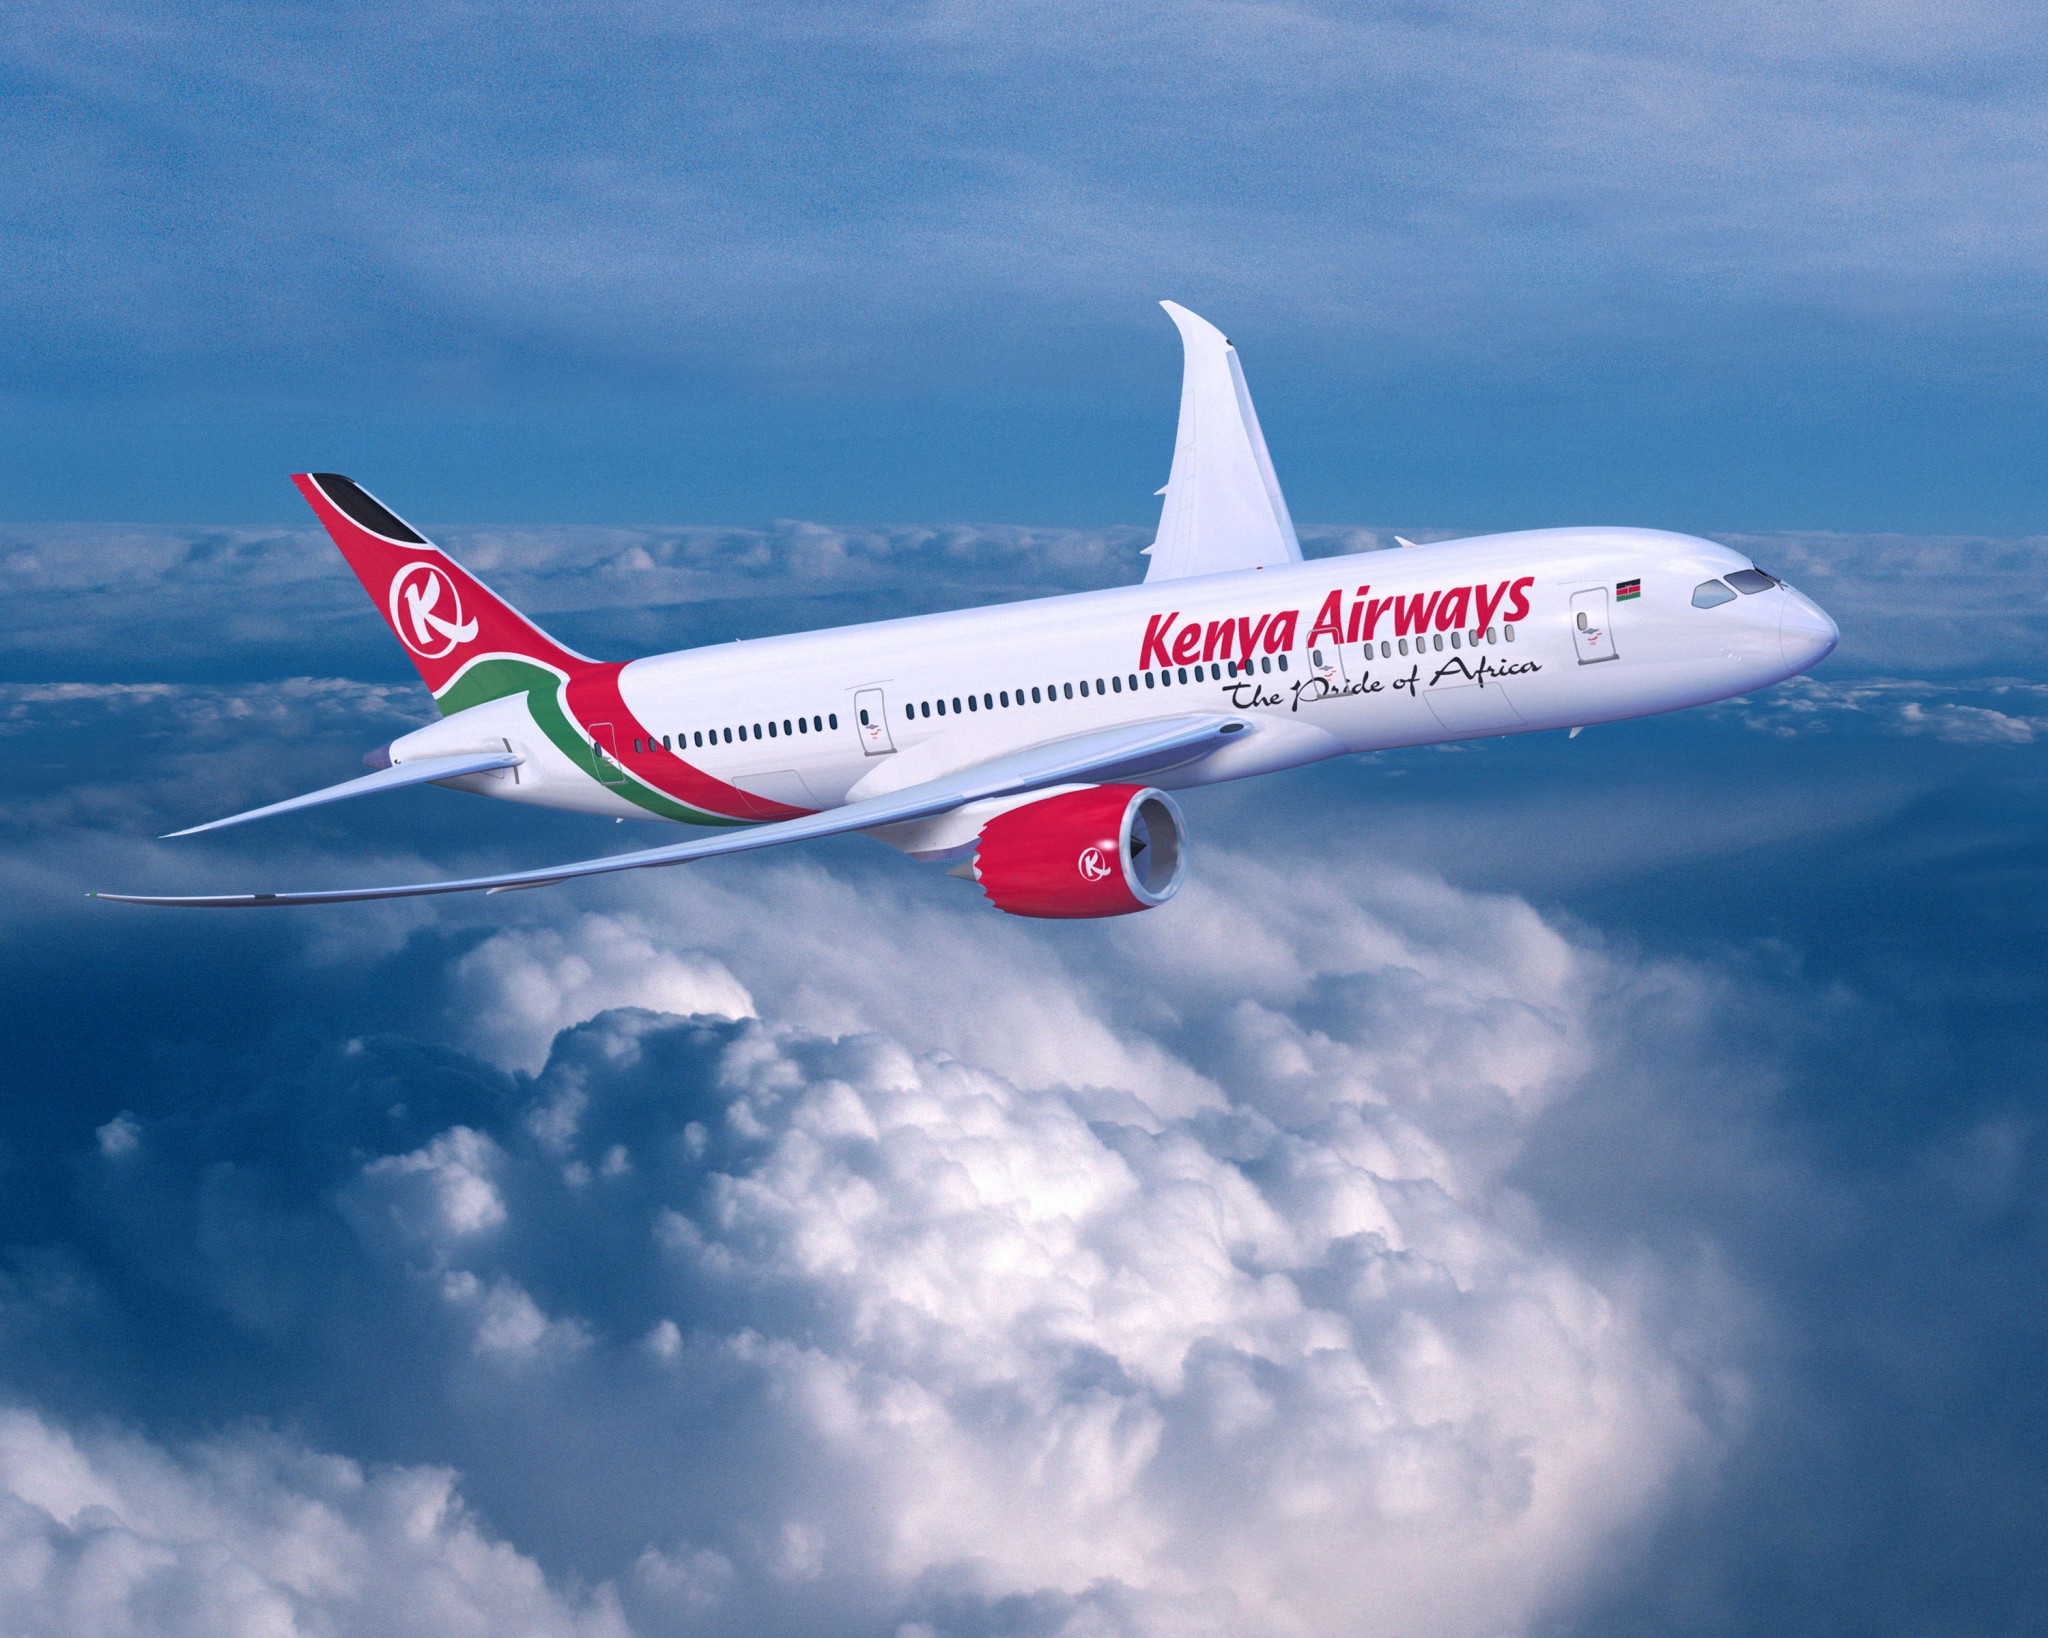 Kenya Airways celebrates 40 years of operation